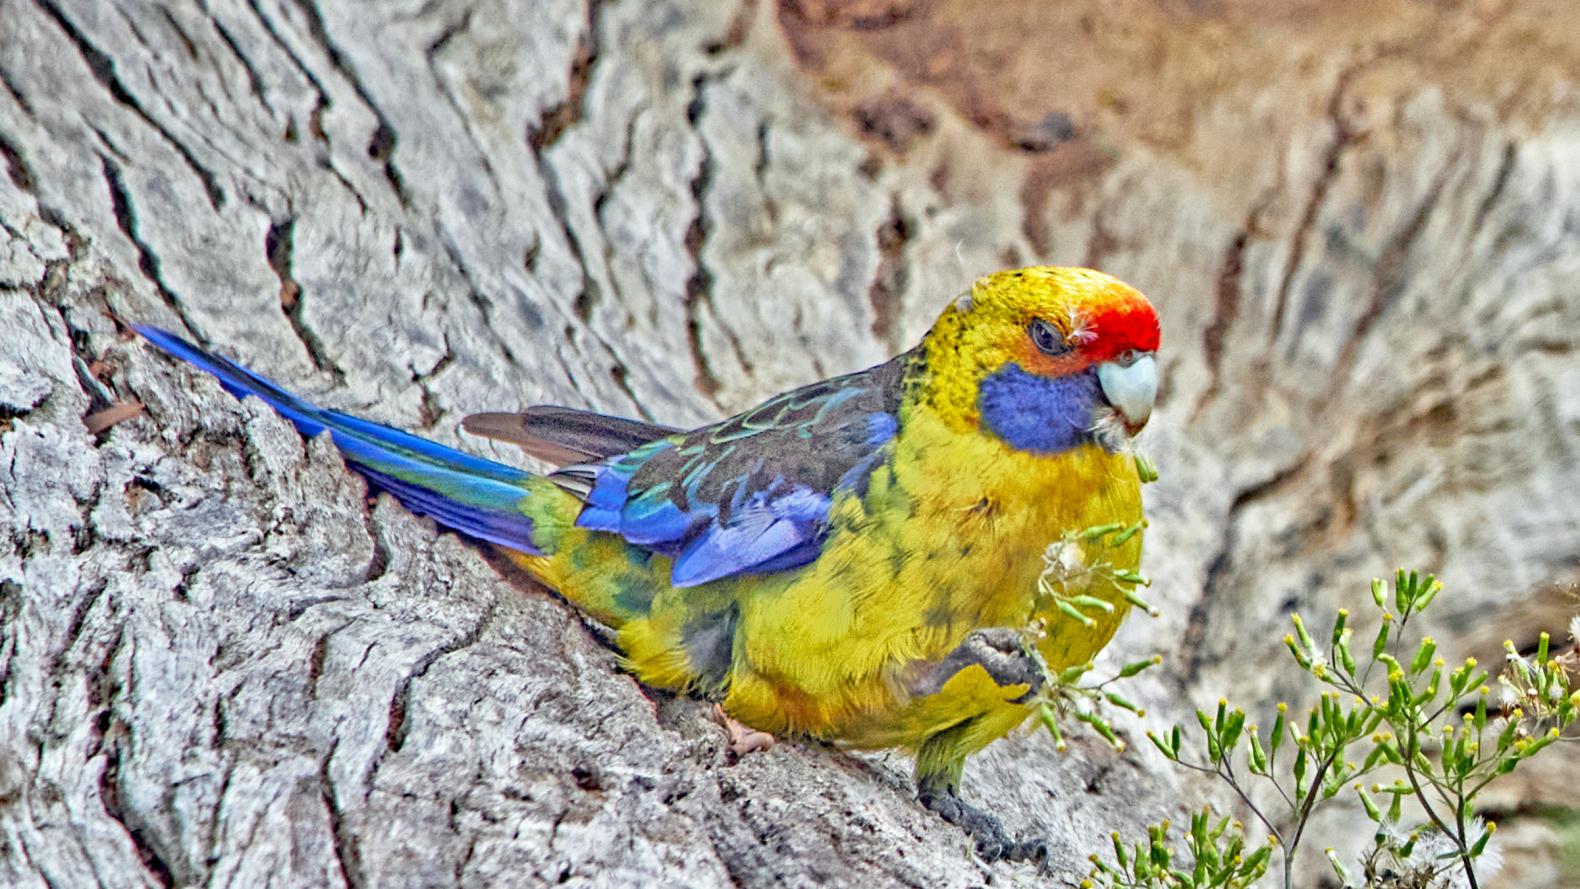 Tasmania Endemic Birds and Wildlife